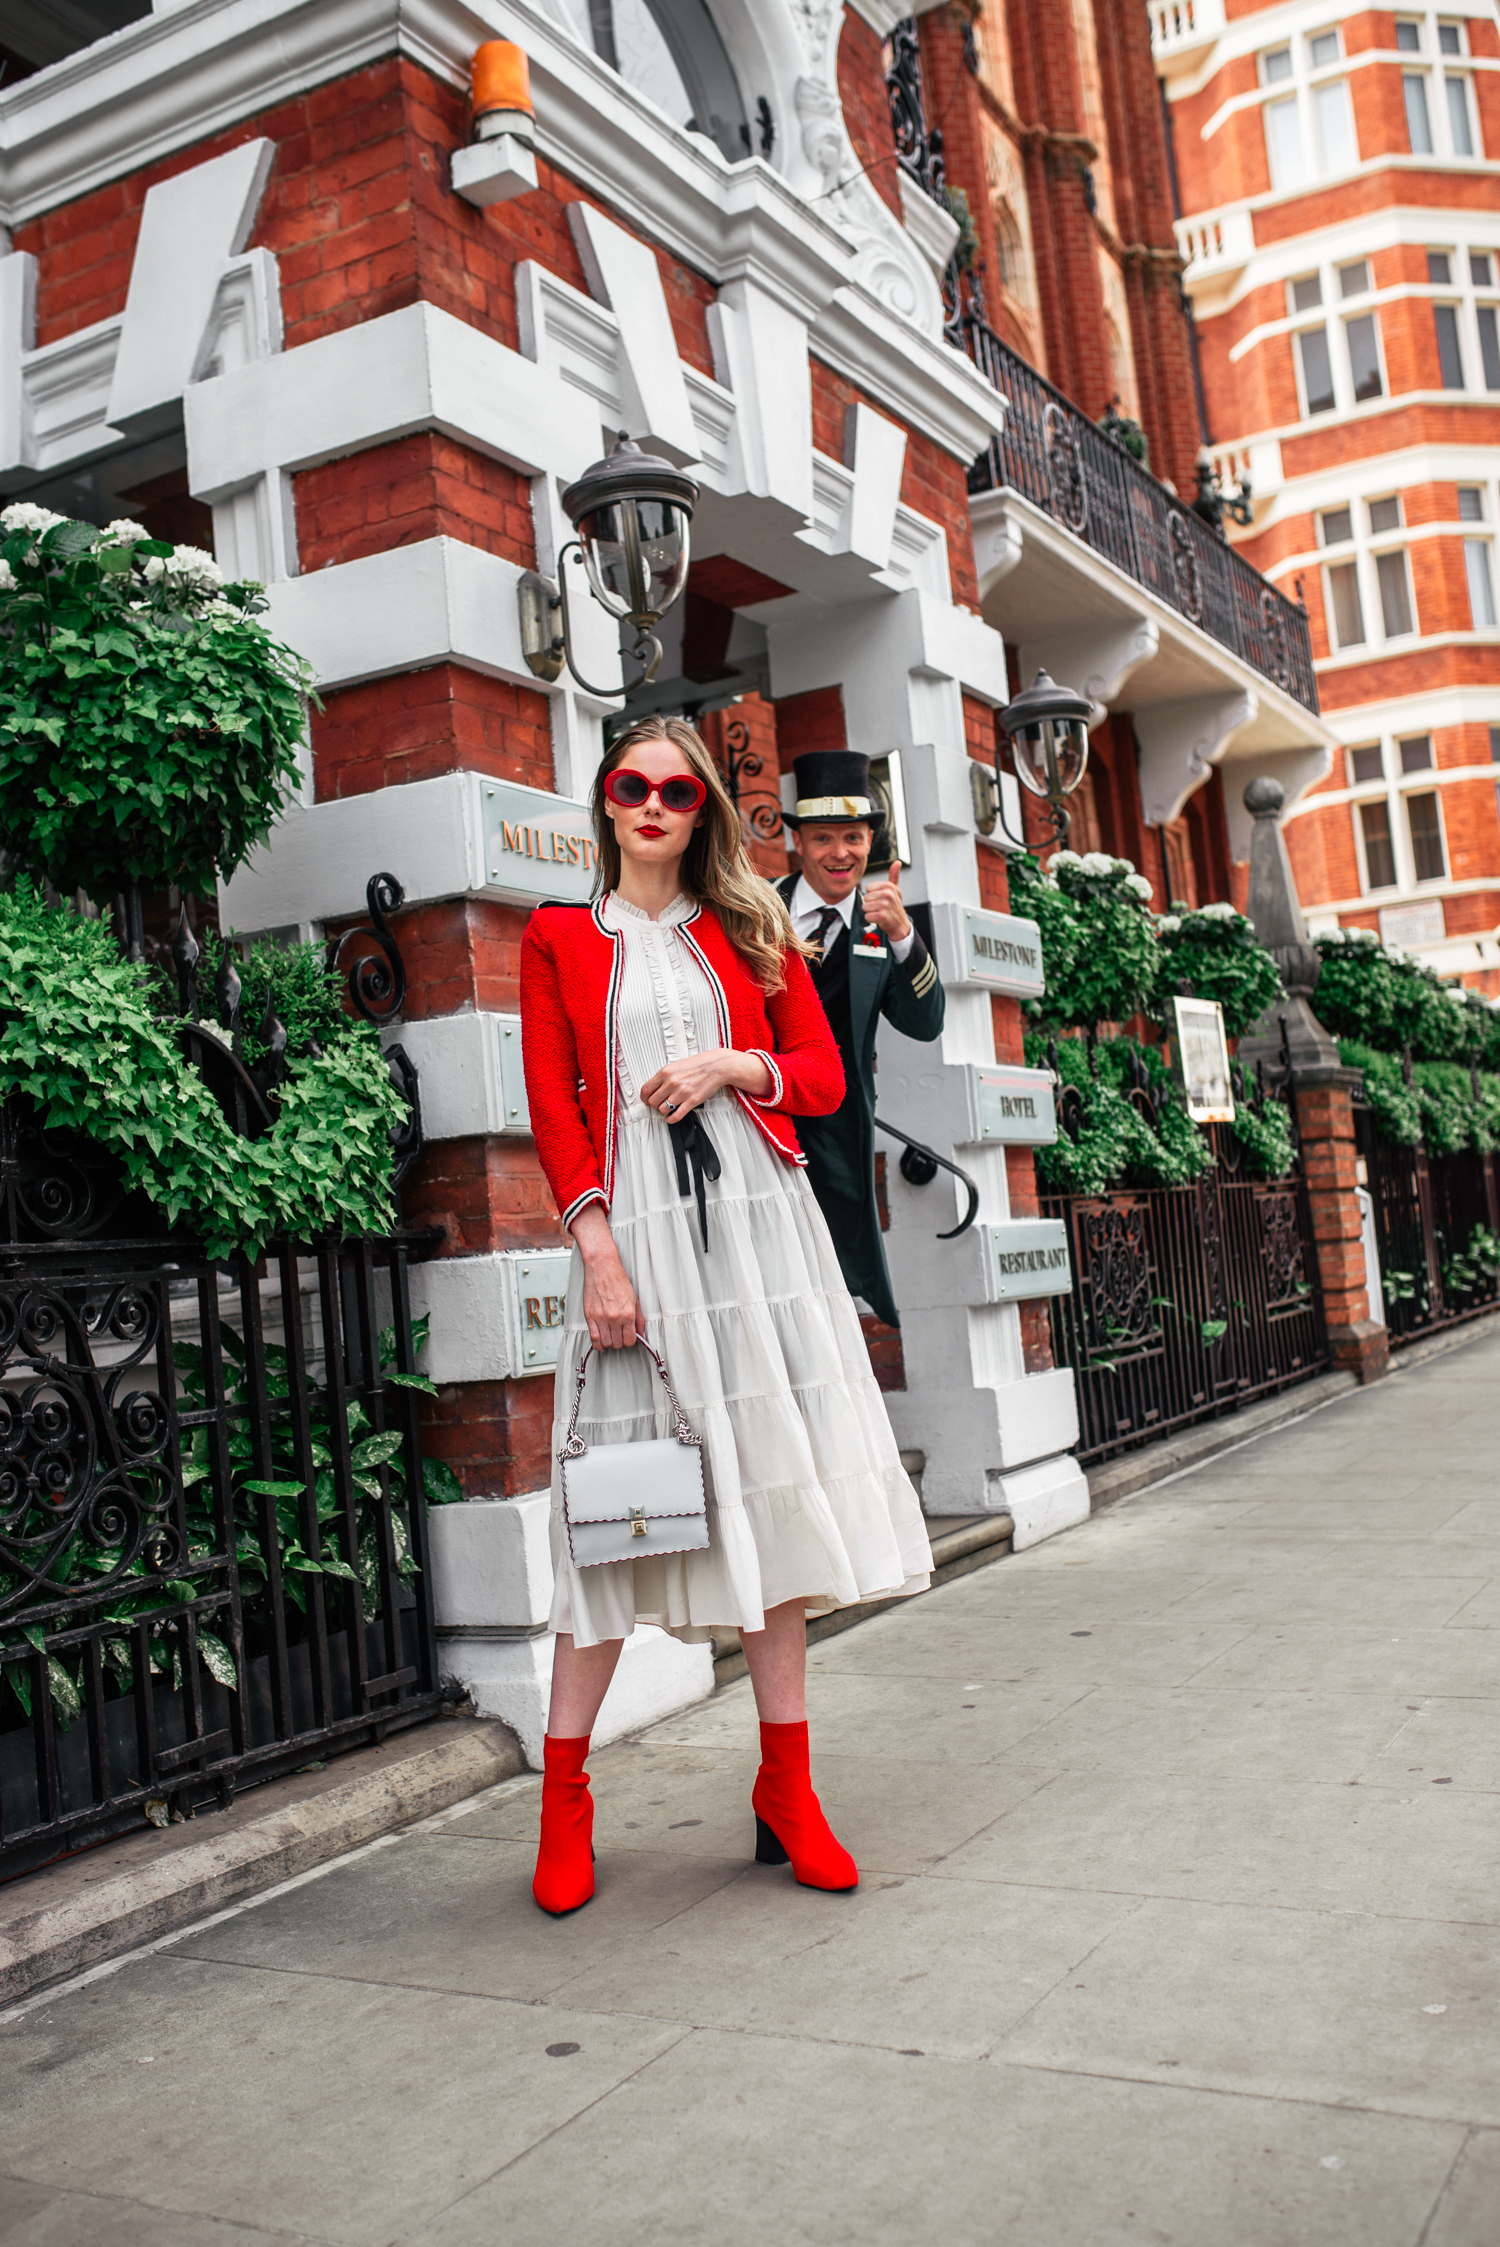 Alyssa Campanella of The A List blog experiences luxury in London at the Milestone hotel wearing The Kooples jacket, Ulla Johnson dress, and Fendi Kan I bag